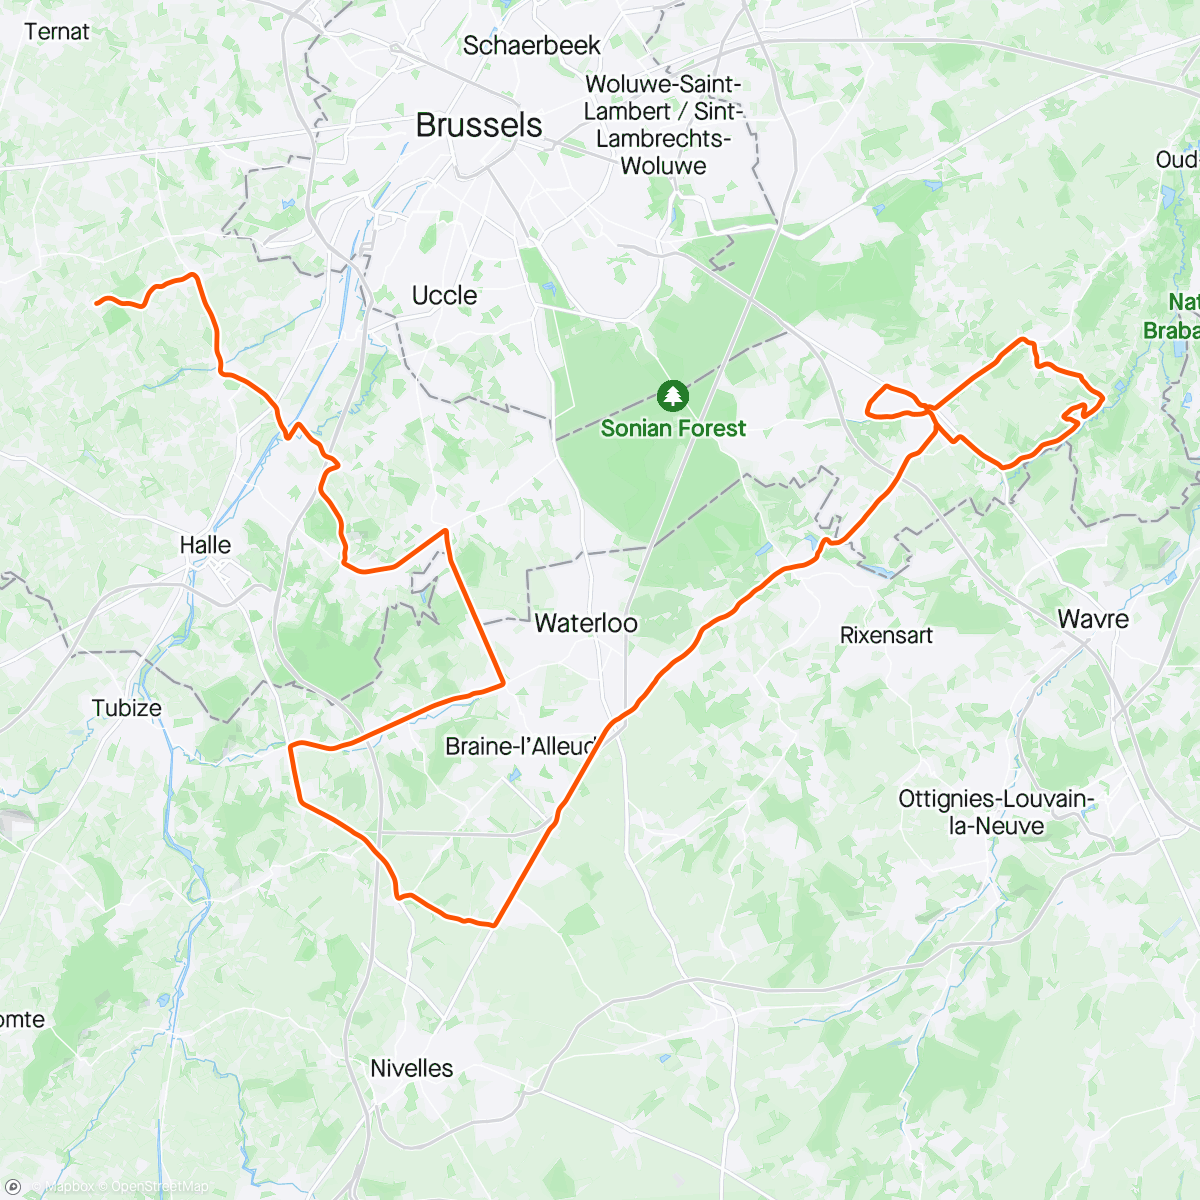 Mapa de la actividad, Brabantse-Pijl